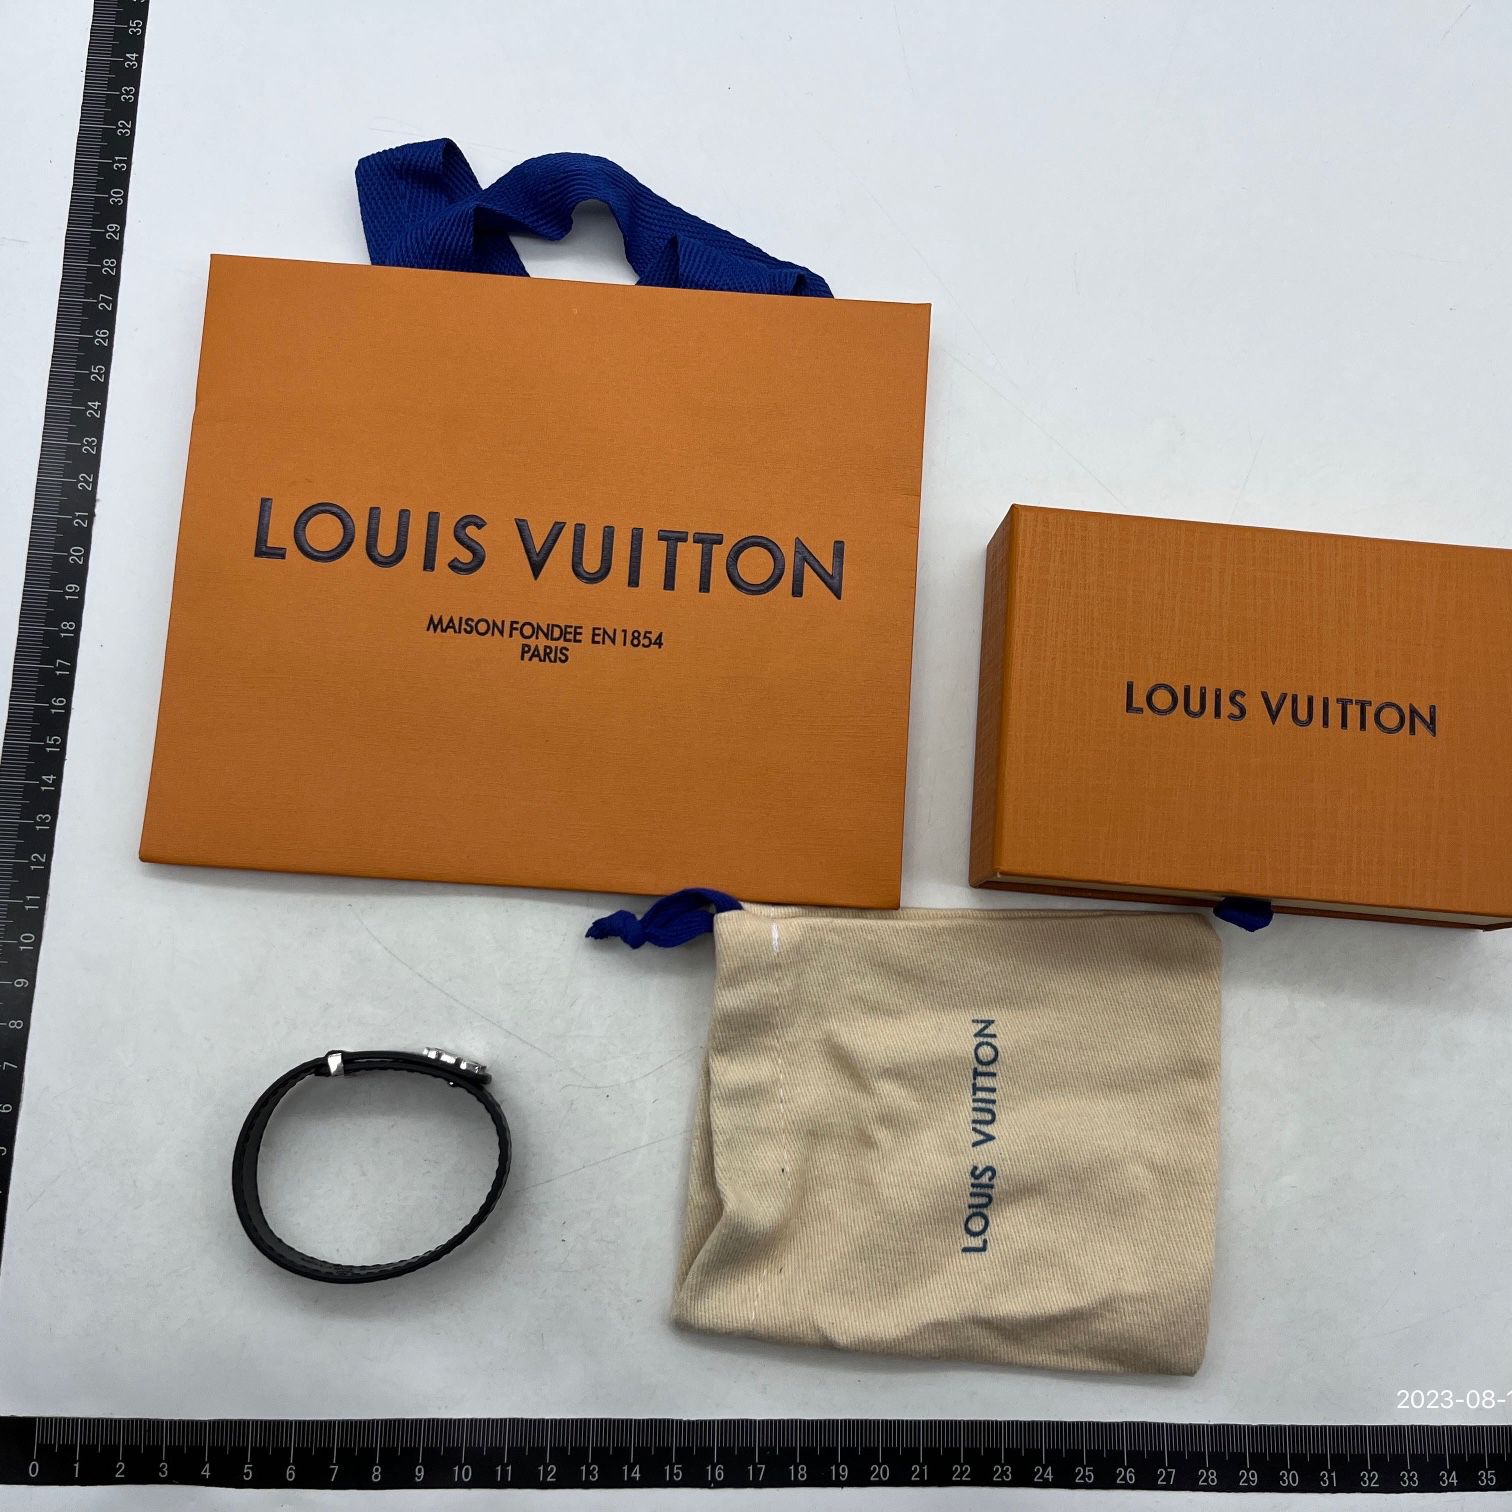 LV Slim Bracelet for Sale in Brooklyn, NY - OfferUp